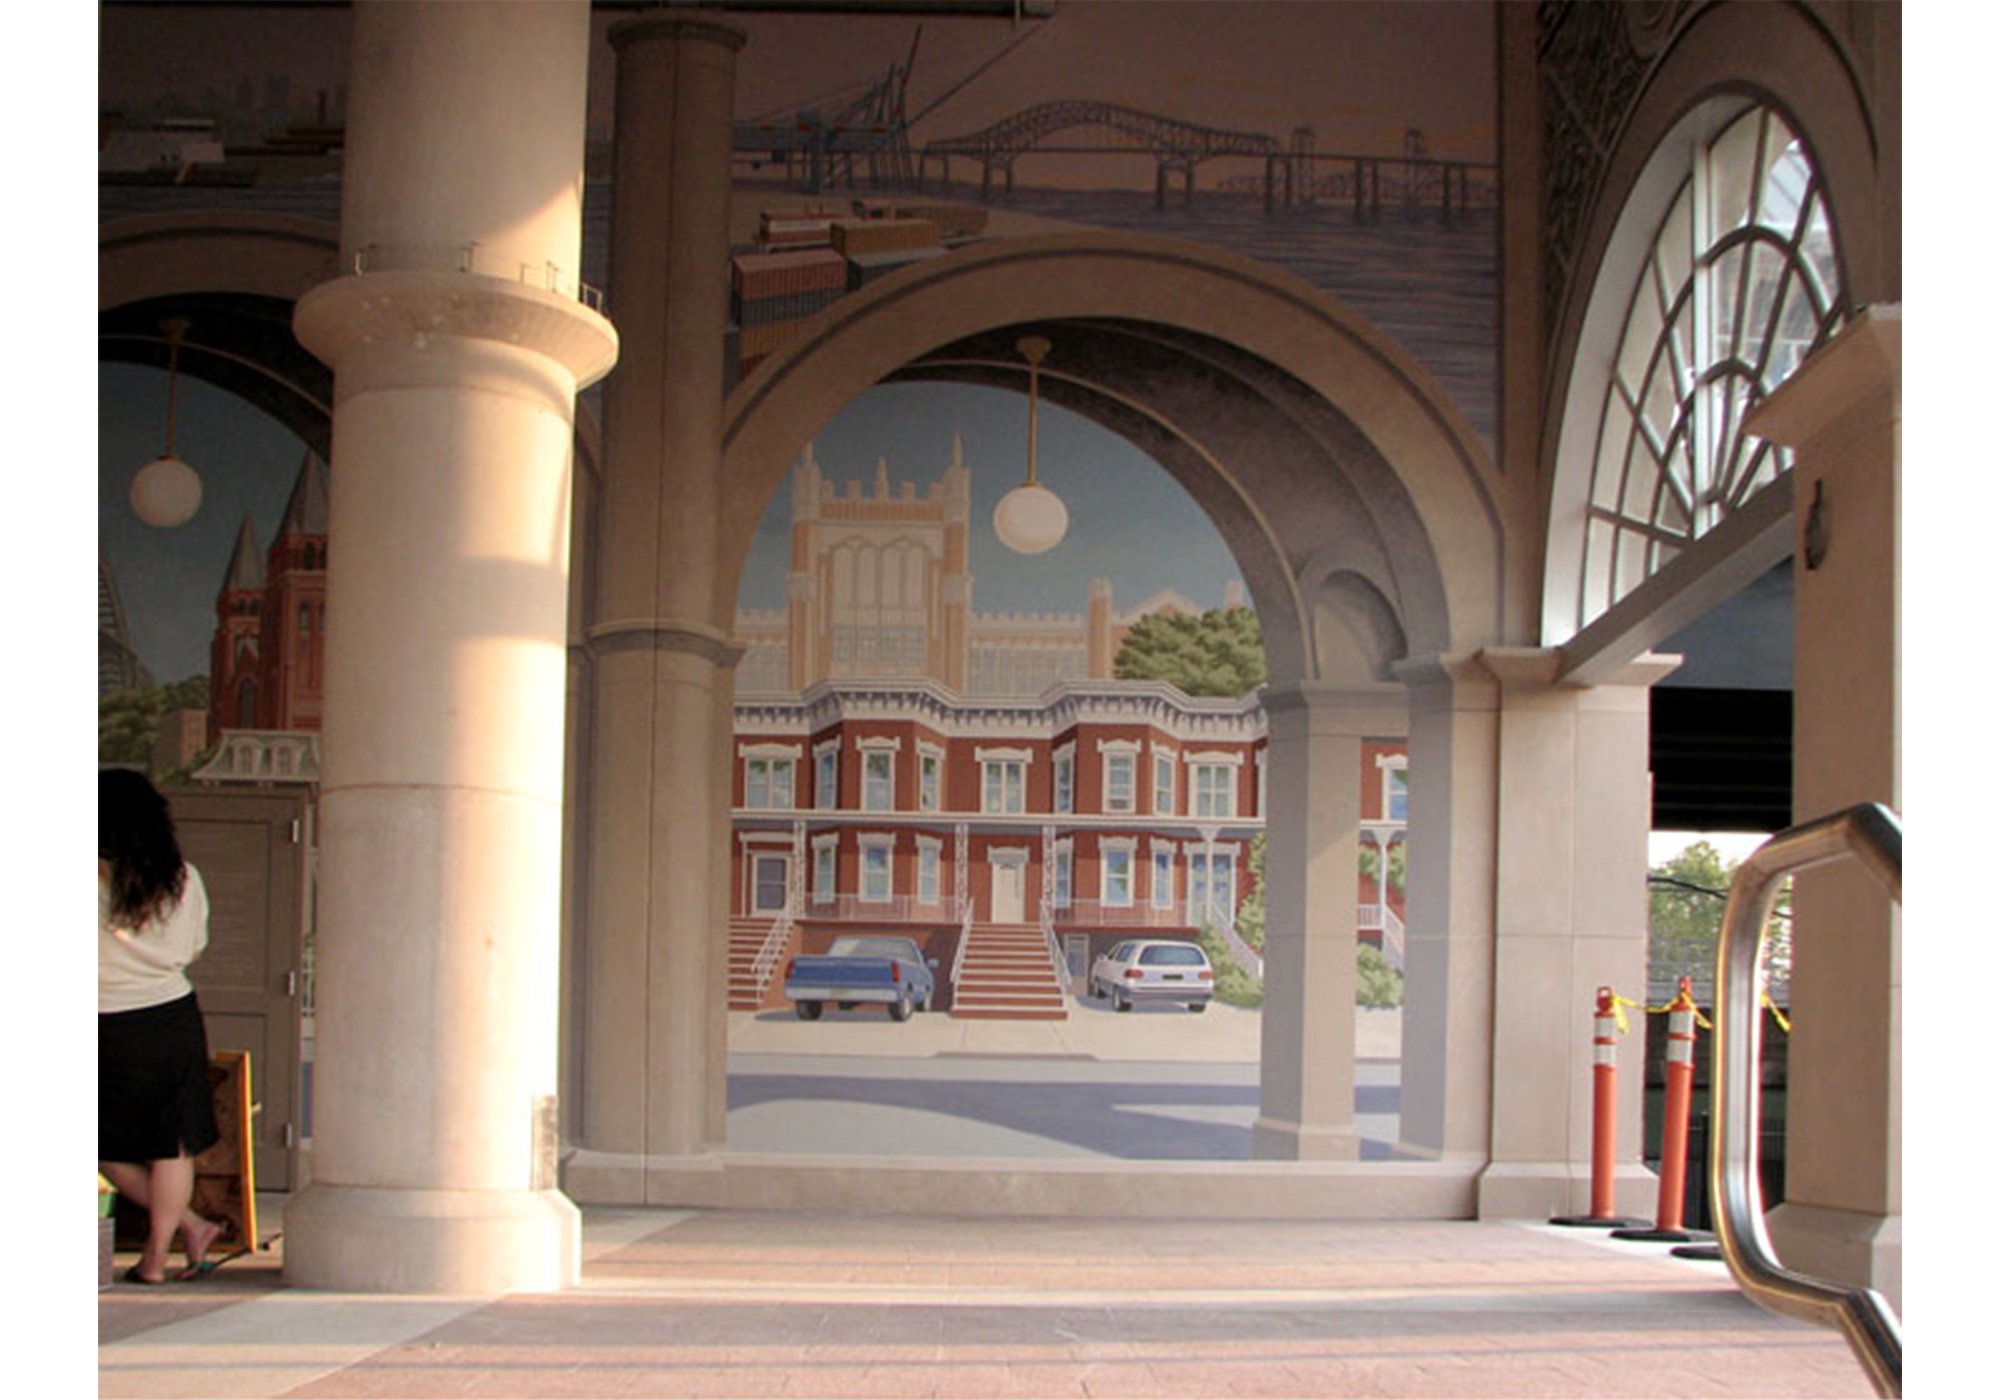 Light Rail Station, Bayonne, N.J. for Richard Haas and Evergreene Architectural Arts